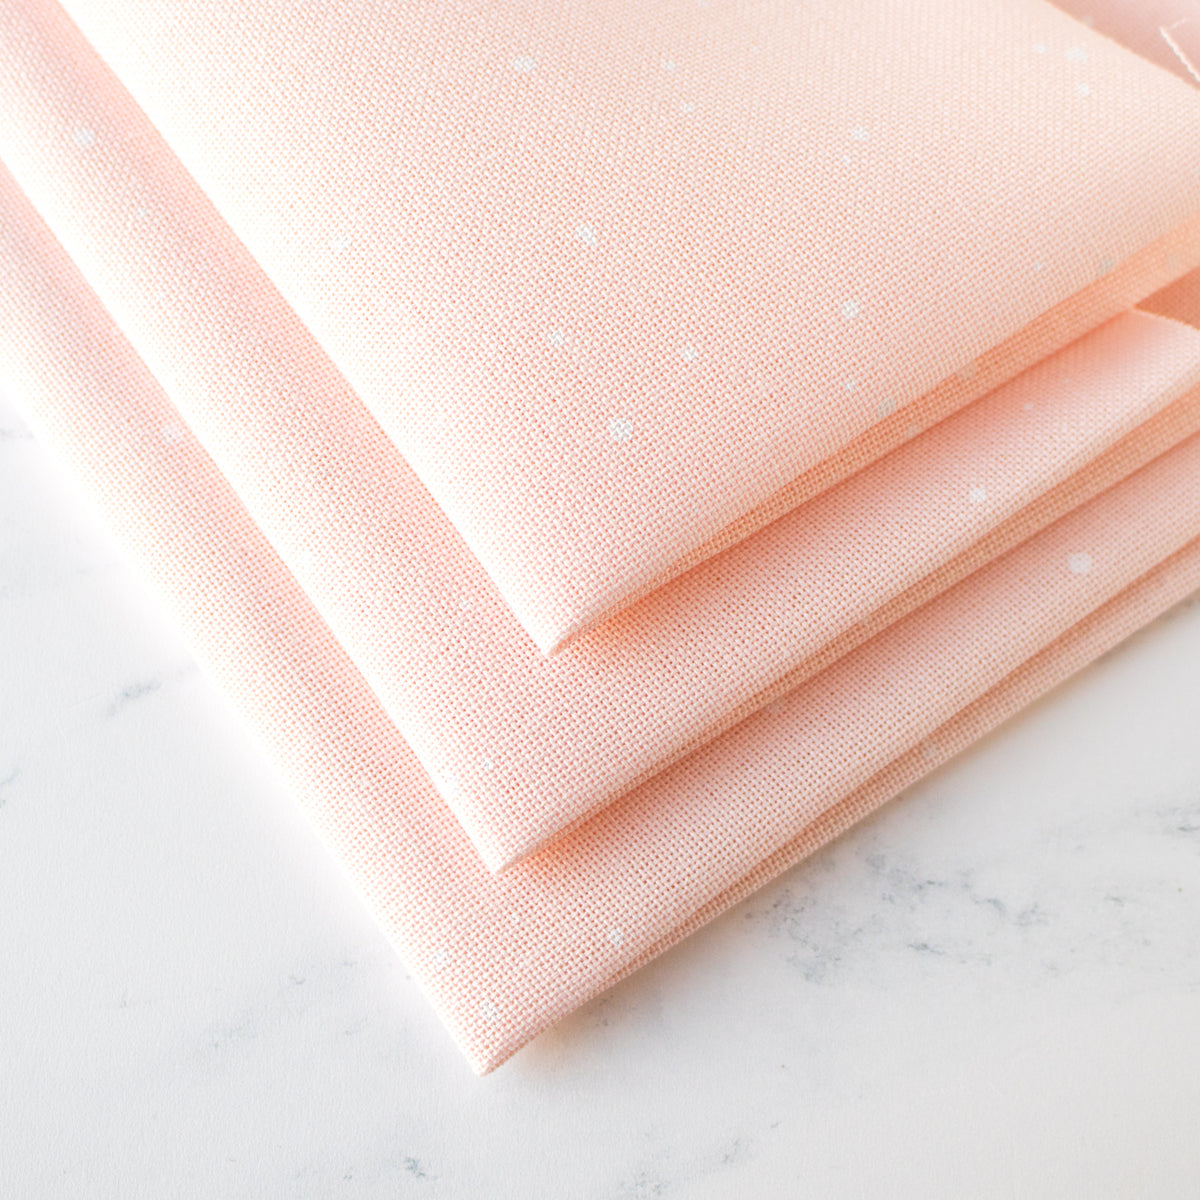 Evenweave Cross Stitch Fabric - Powder Pink Splash